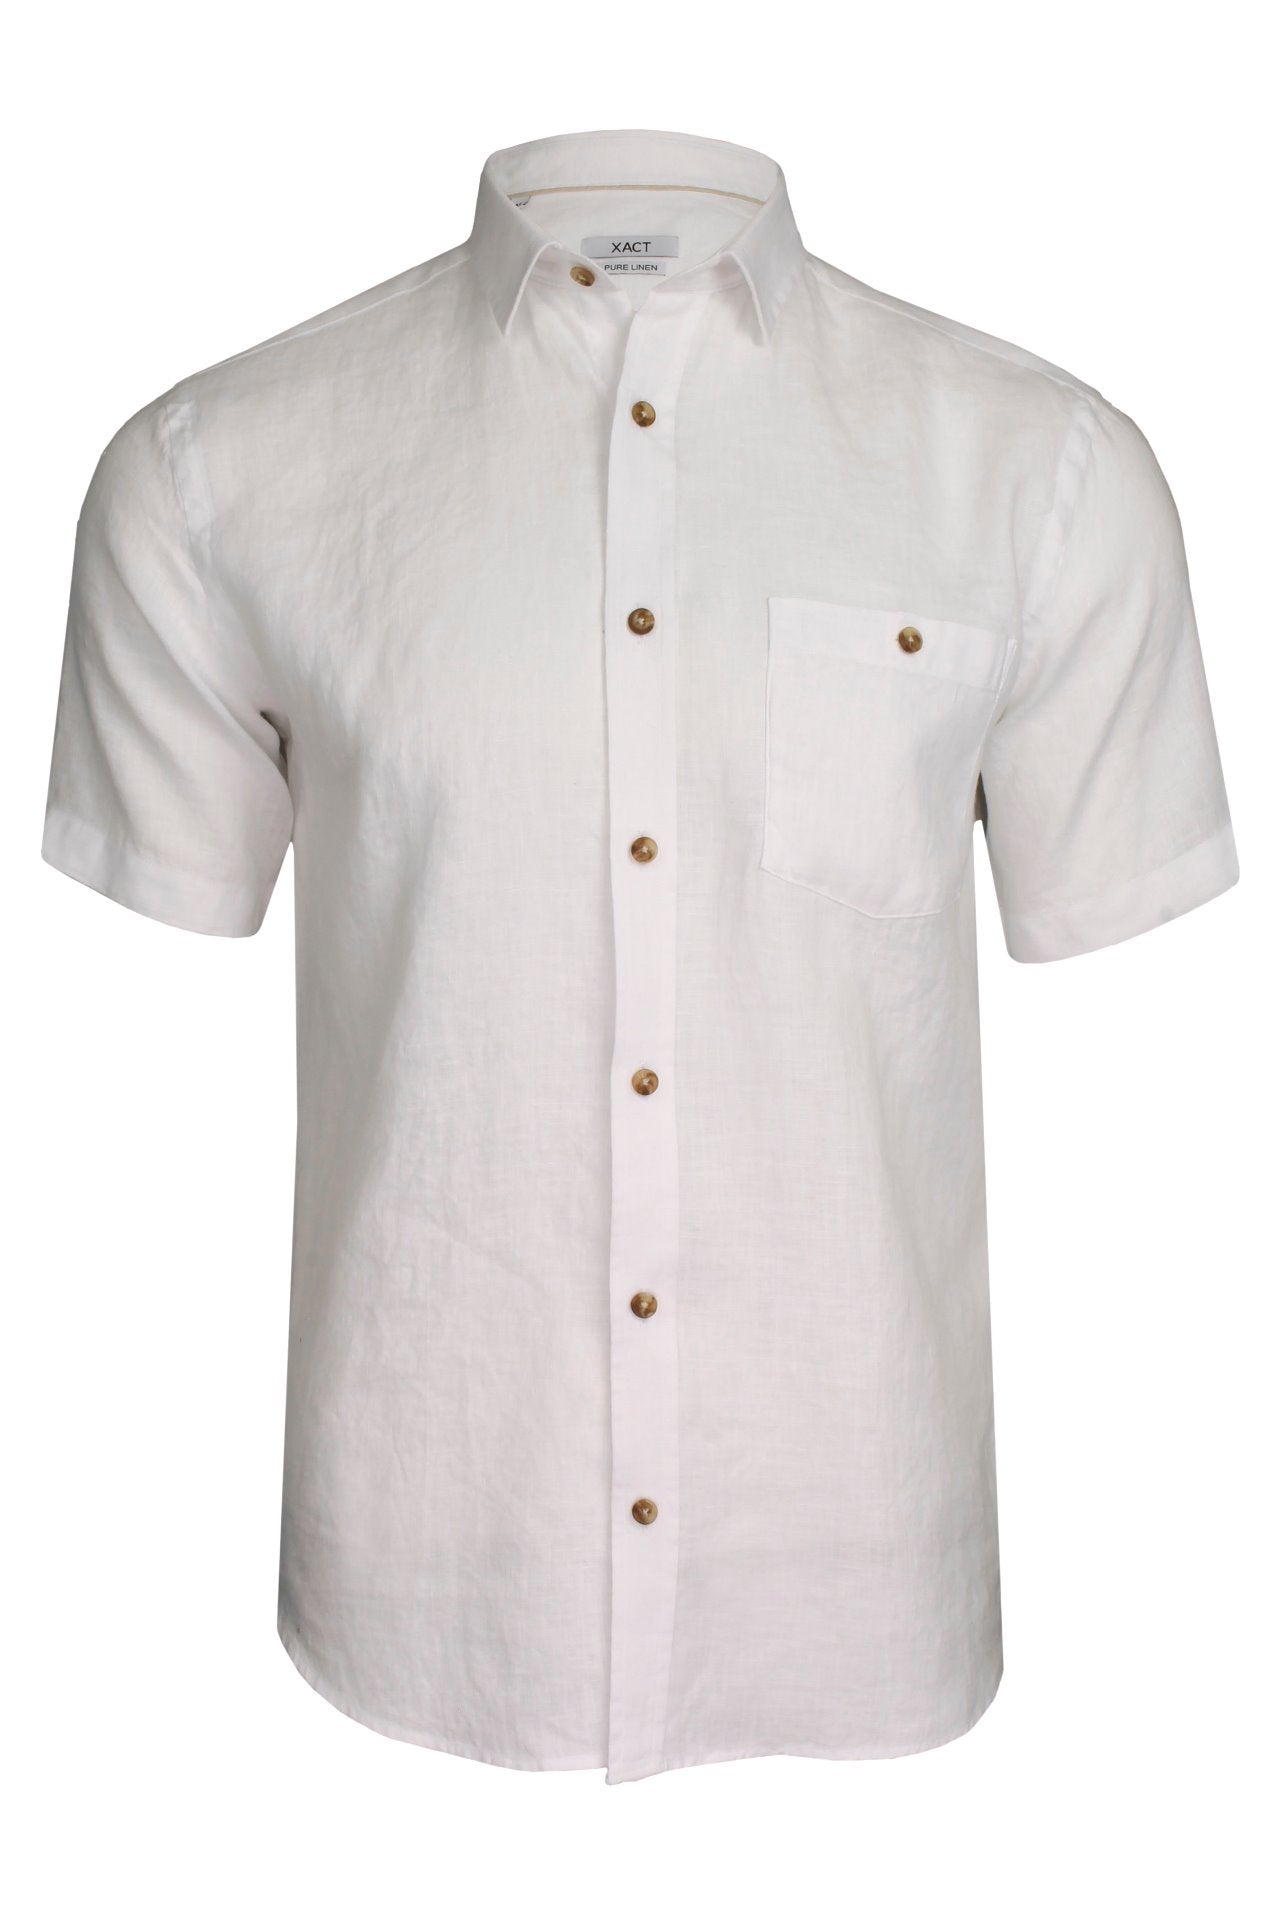 Xact Mens 100% Pure Linen Shirt - Short Sleeved - Regular Fit-Main Image